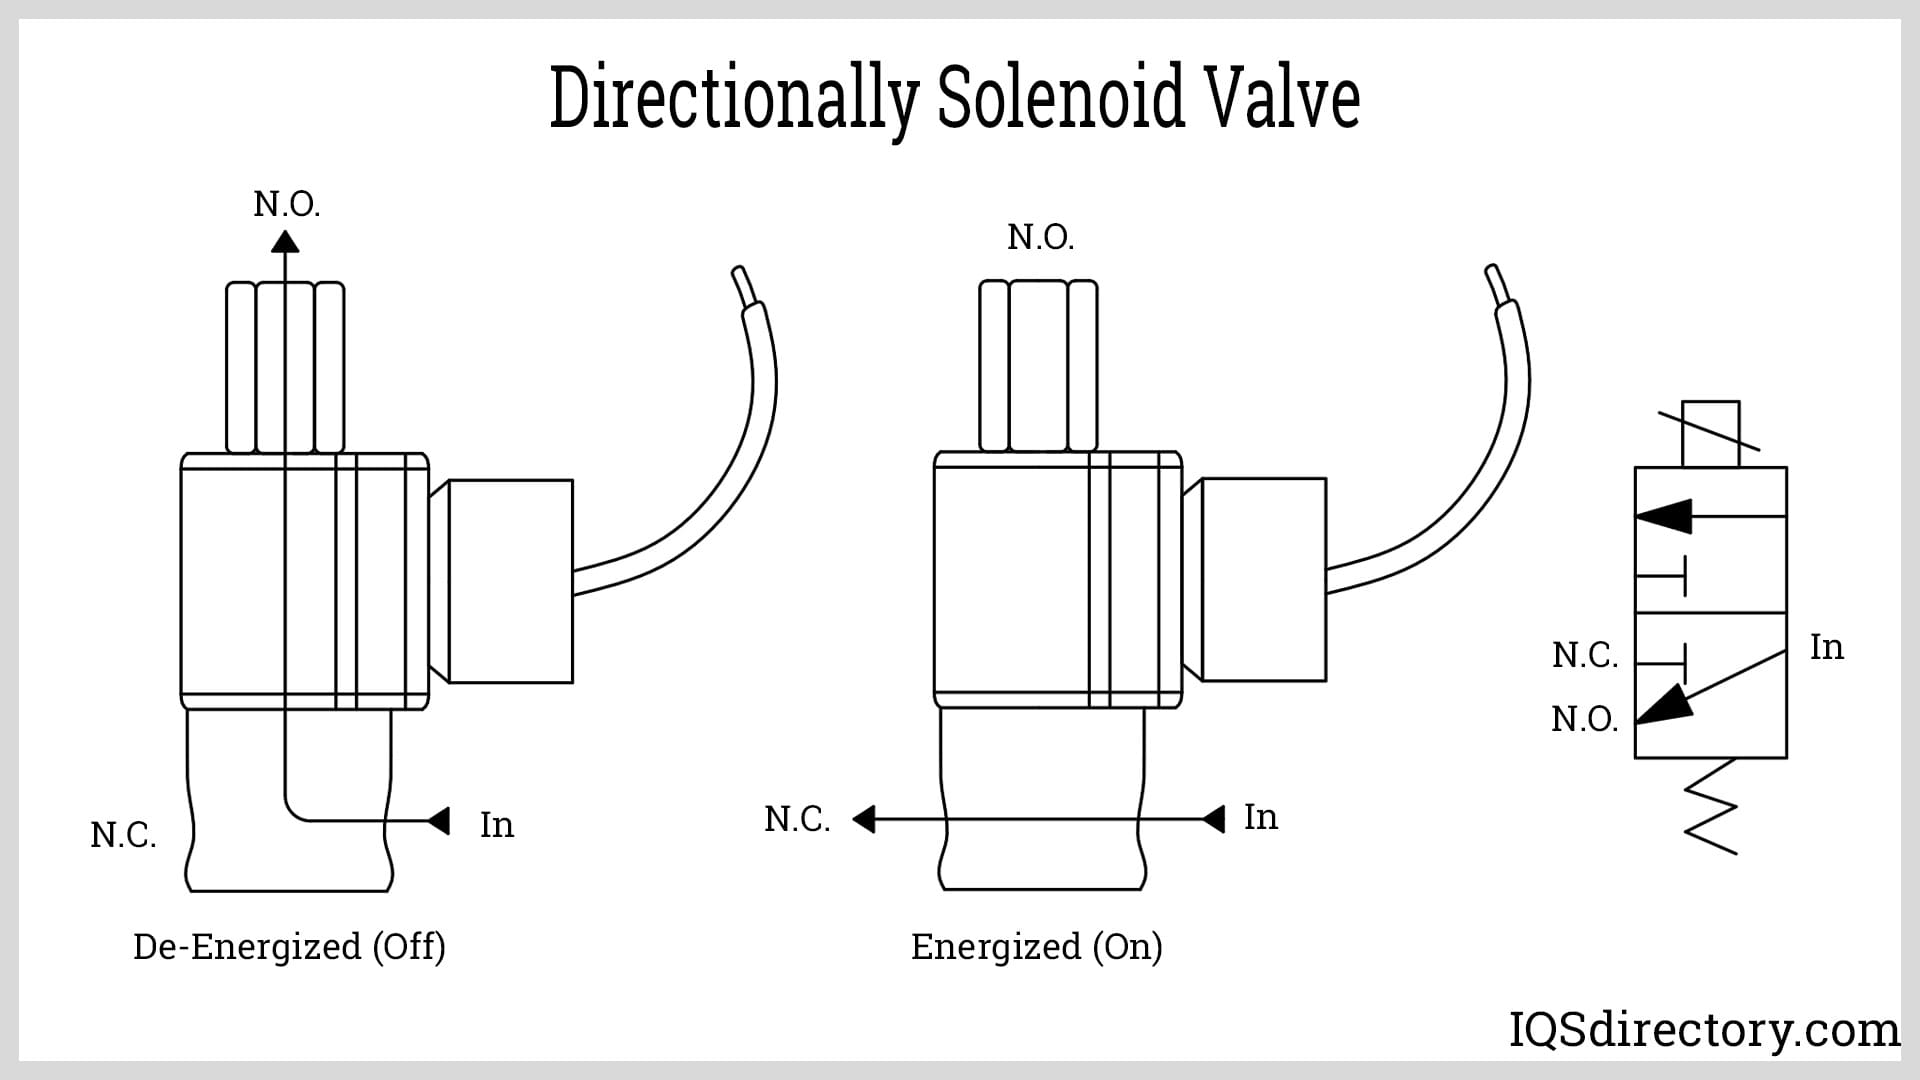 Directionally Solenoid Valve